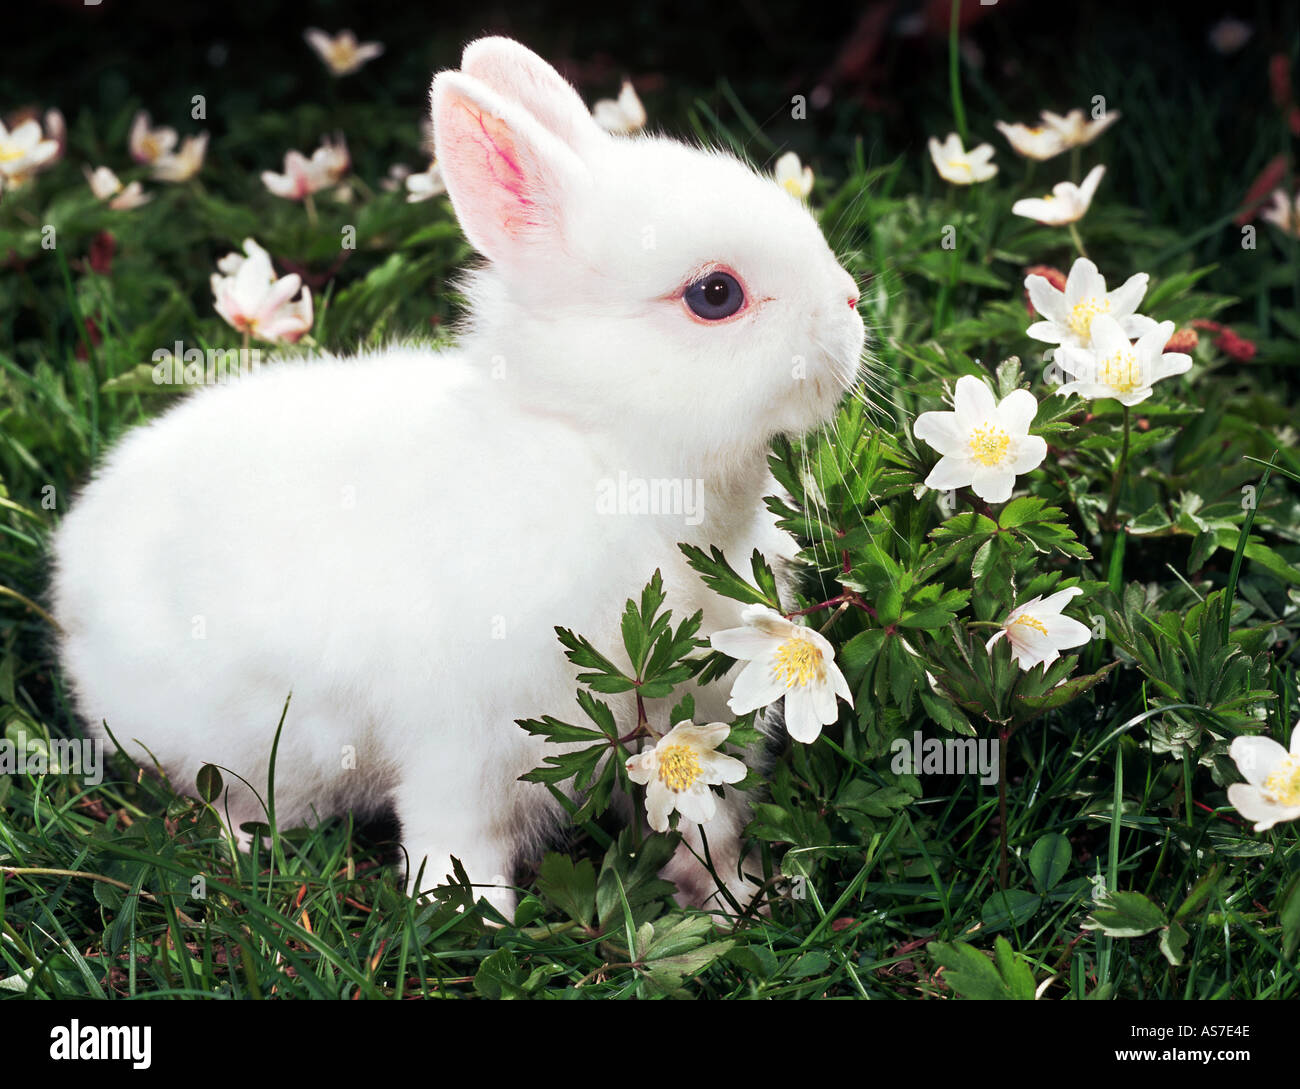 white dwarf rabbit in between flowers Stock Photo